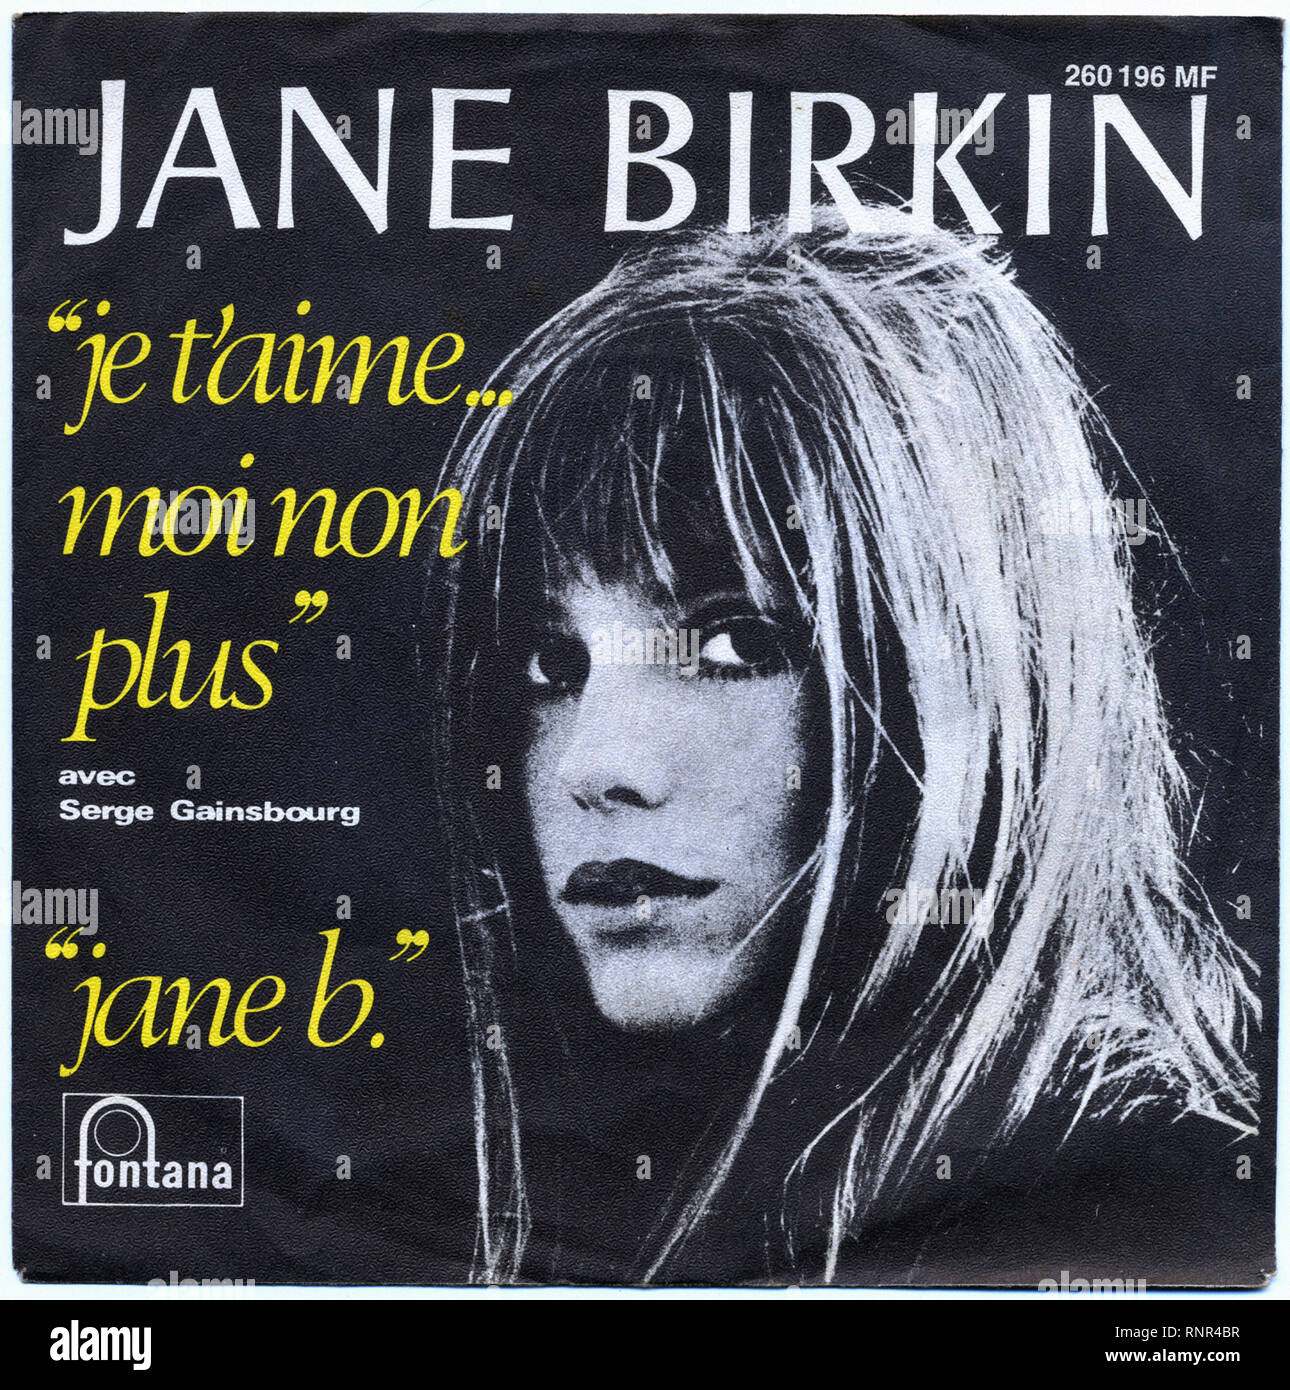 https://c8.alamy.com/comp/RNR4BR/jane-birkin-je-taime-moi-non-plus-vintage-cover-album-RNR4BR.jpg